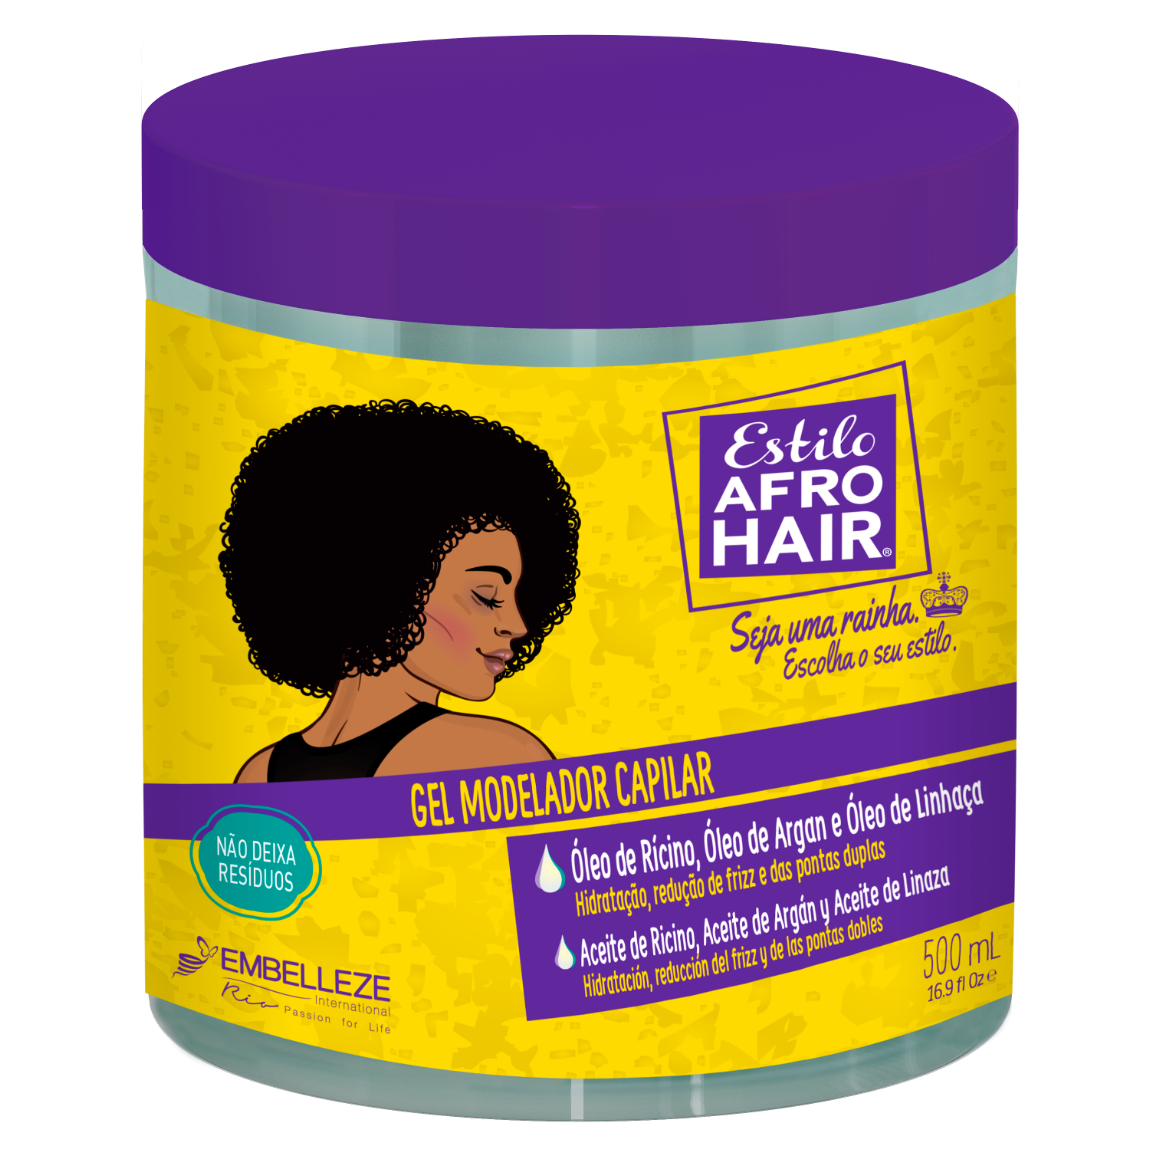 Novex Embelleze Afro Hair Styling Gel 500ml